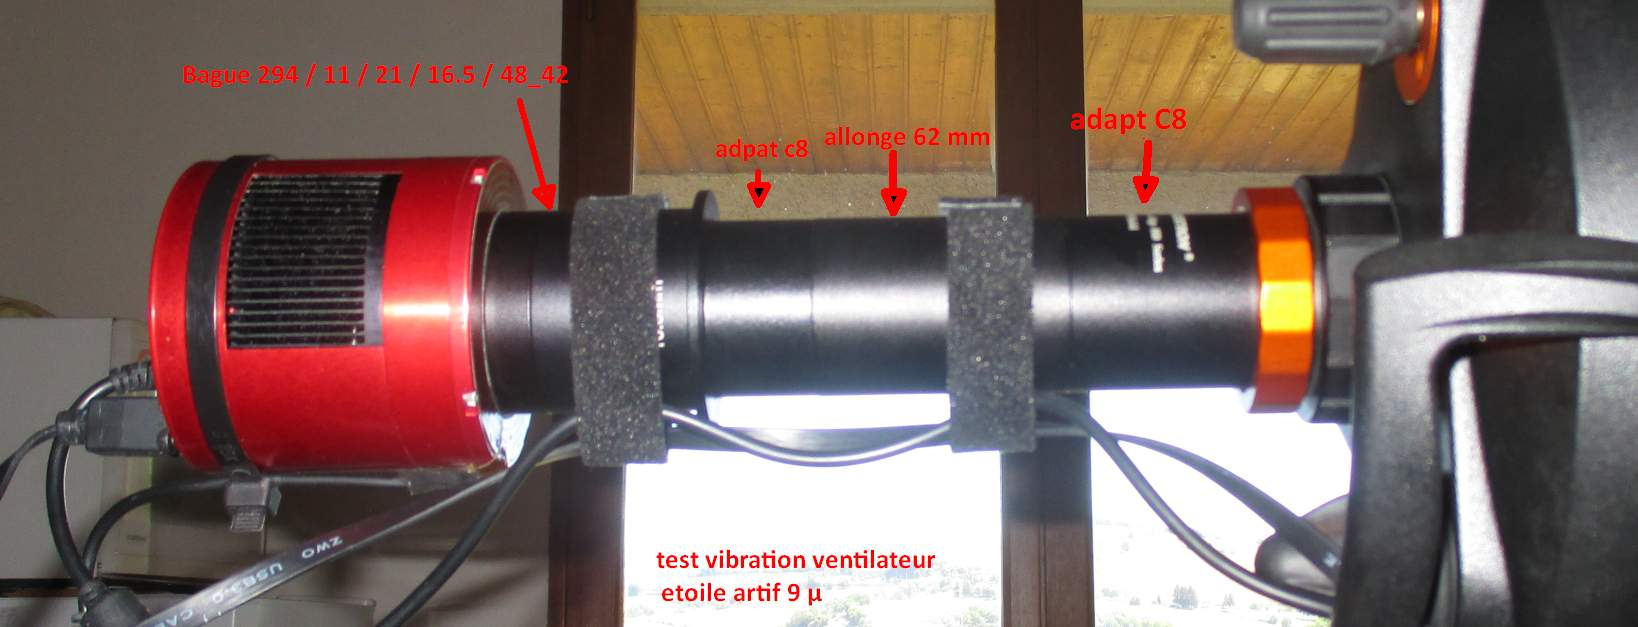 mesure vibration train optique.jpg